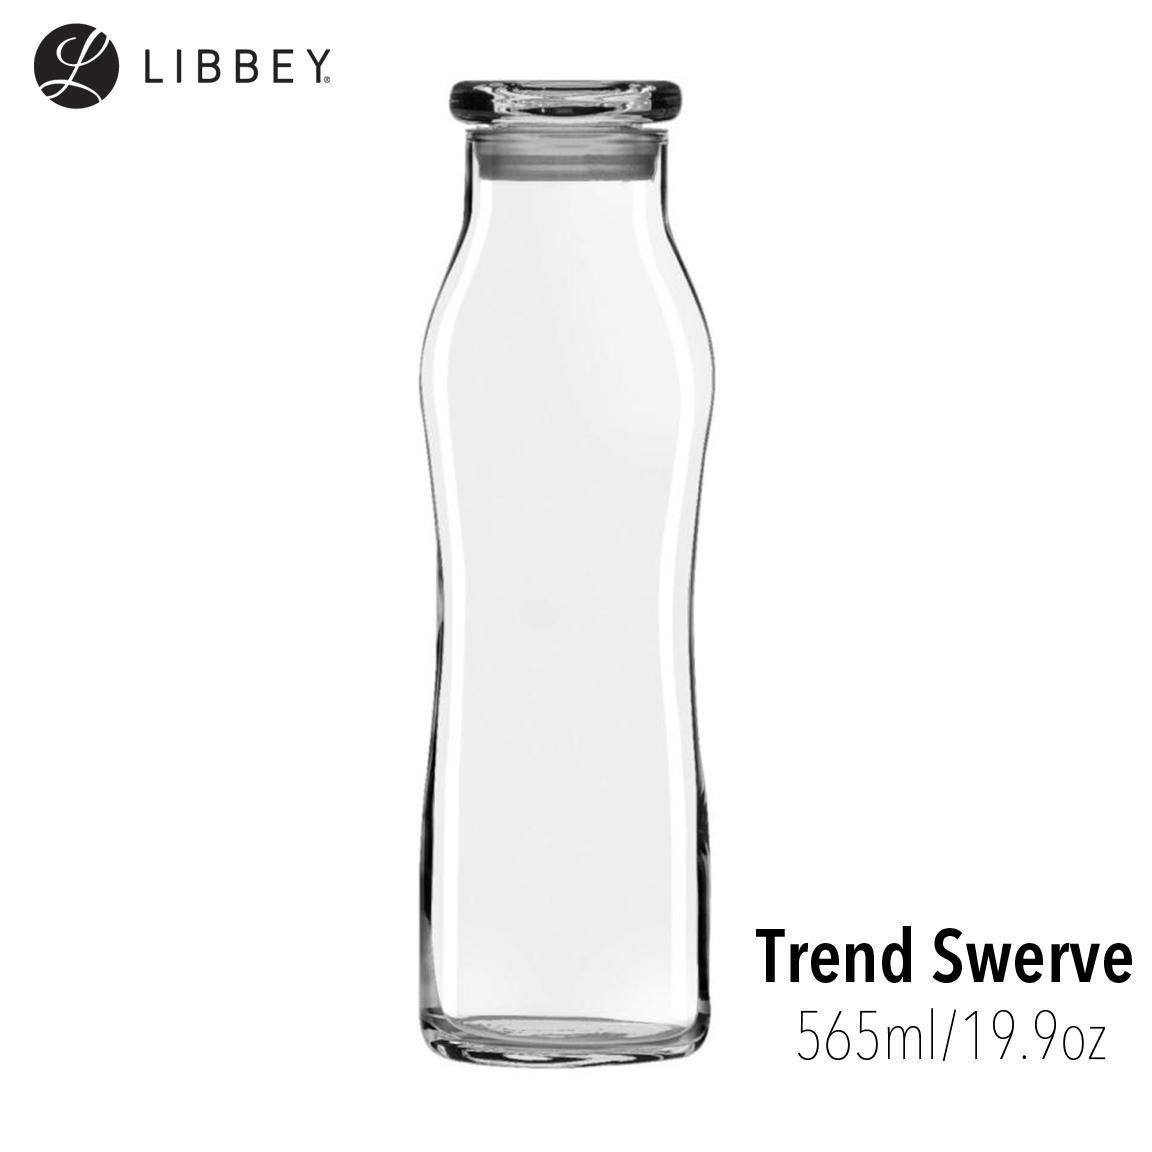 Libbey Trend Swerve Glass Carafe Bottle 565ml/19.9oz